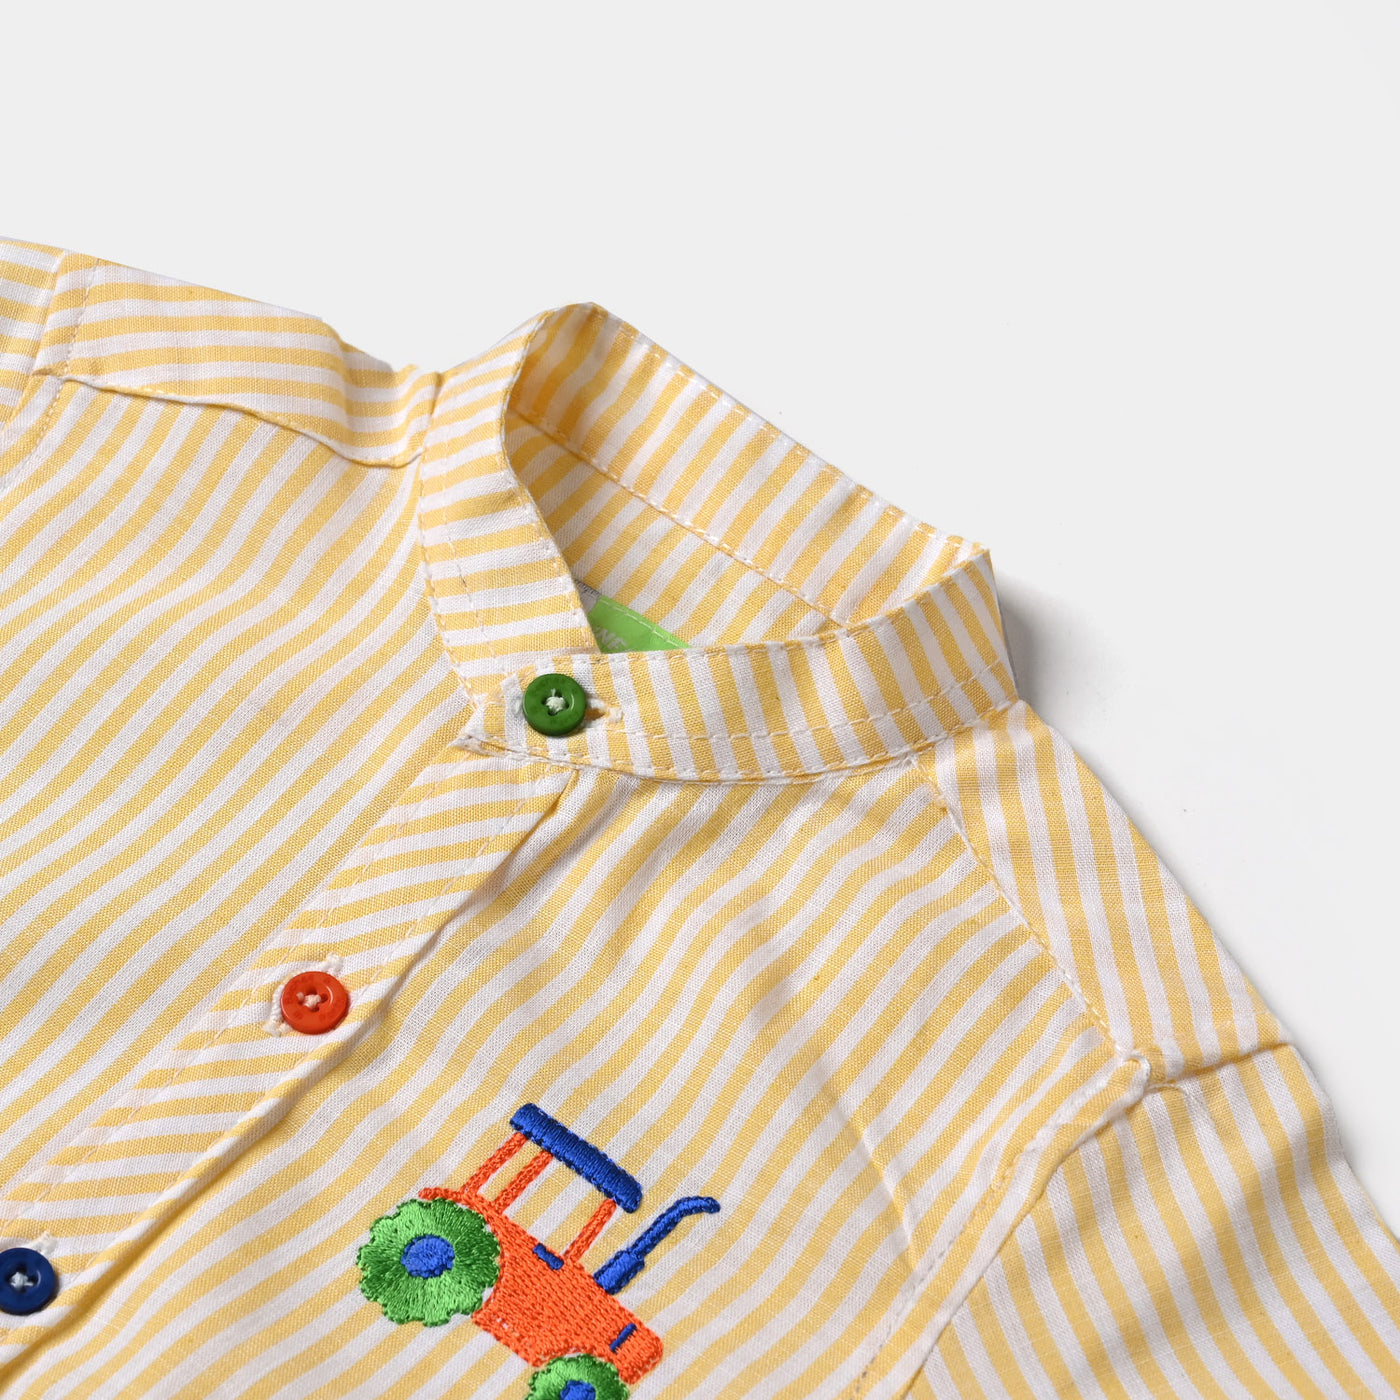 Infant Boys Yarn Dyed Basic Casual Shirt (TRUCK)-Yellow